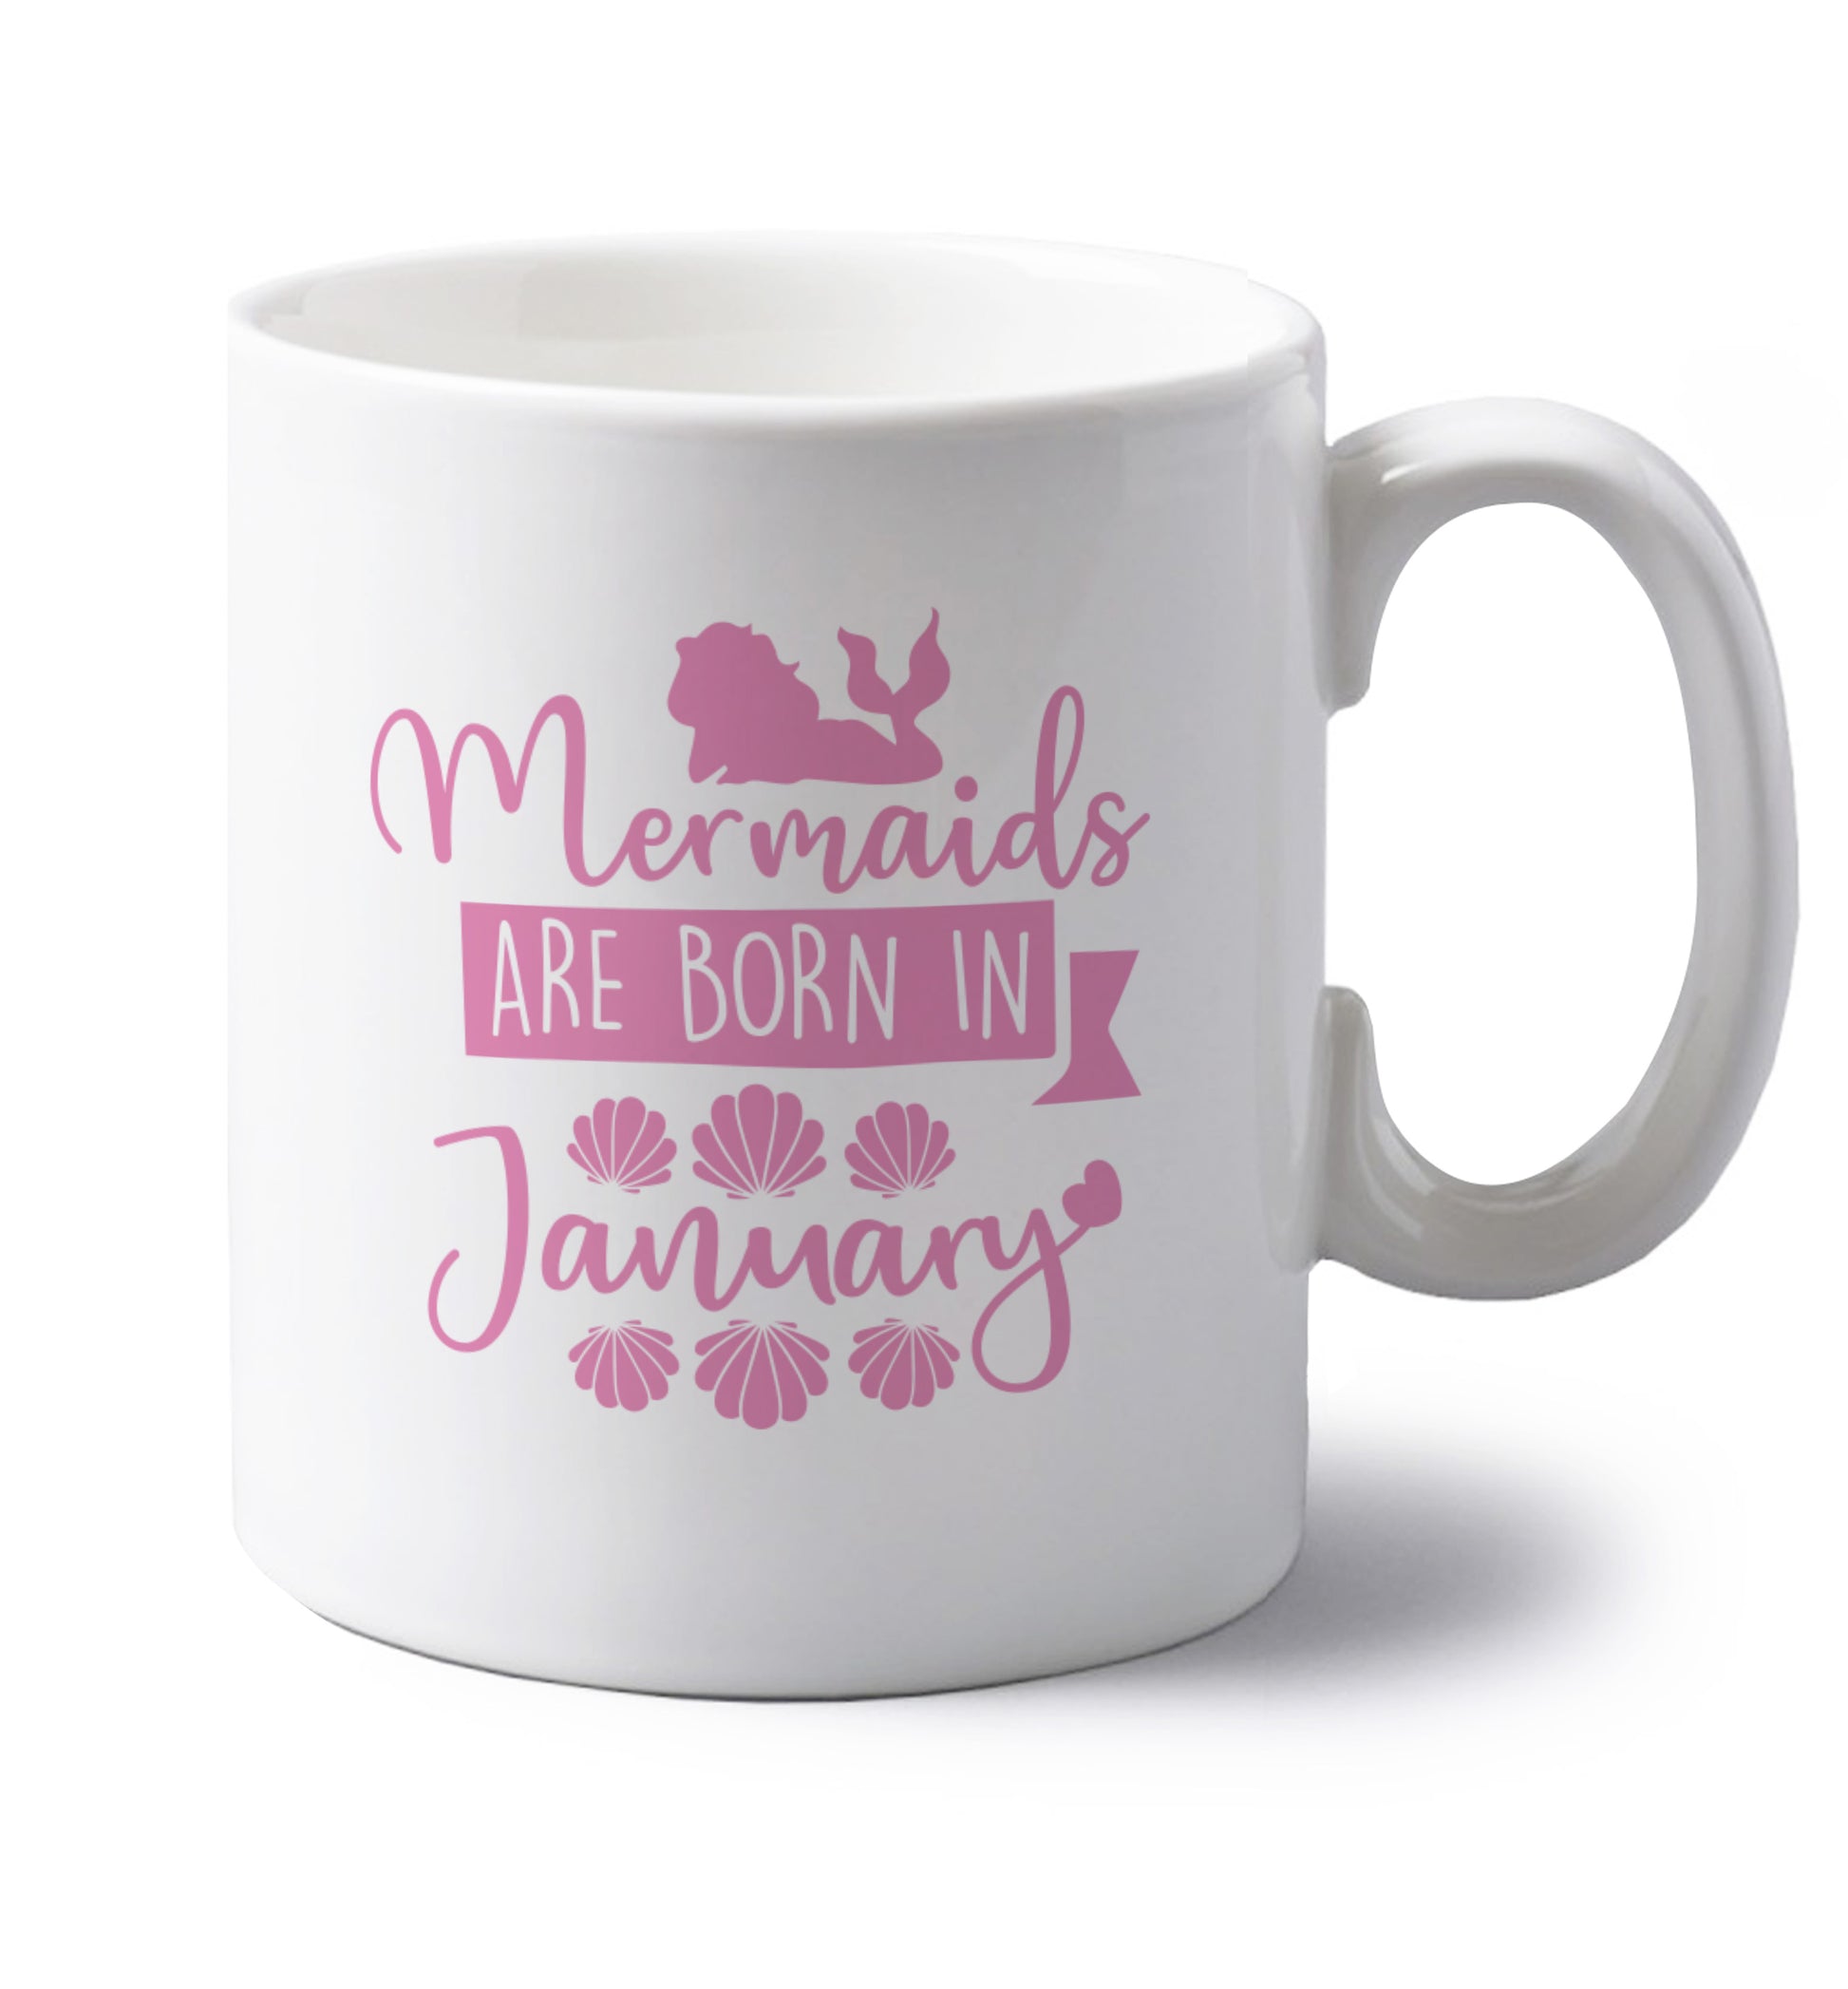 Mermaids are born in January left handed white ceramic mug 